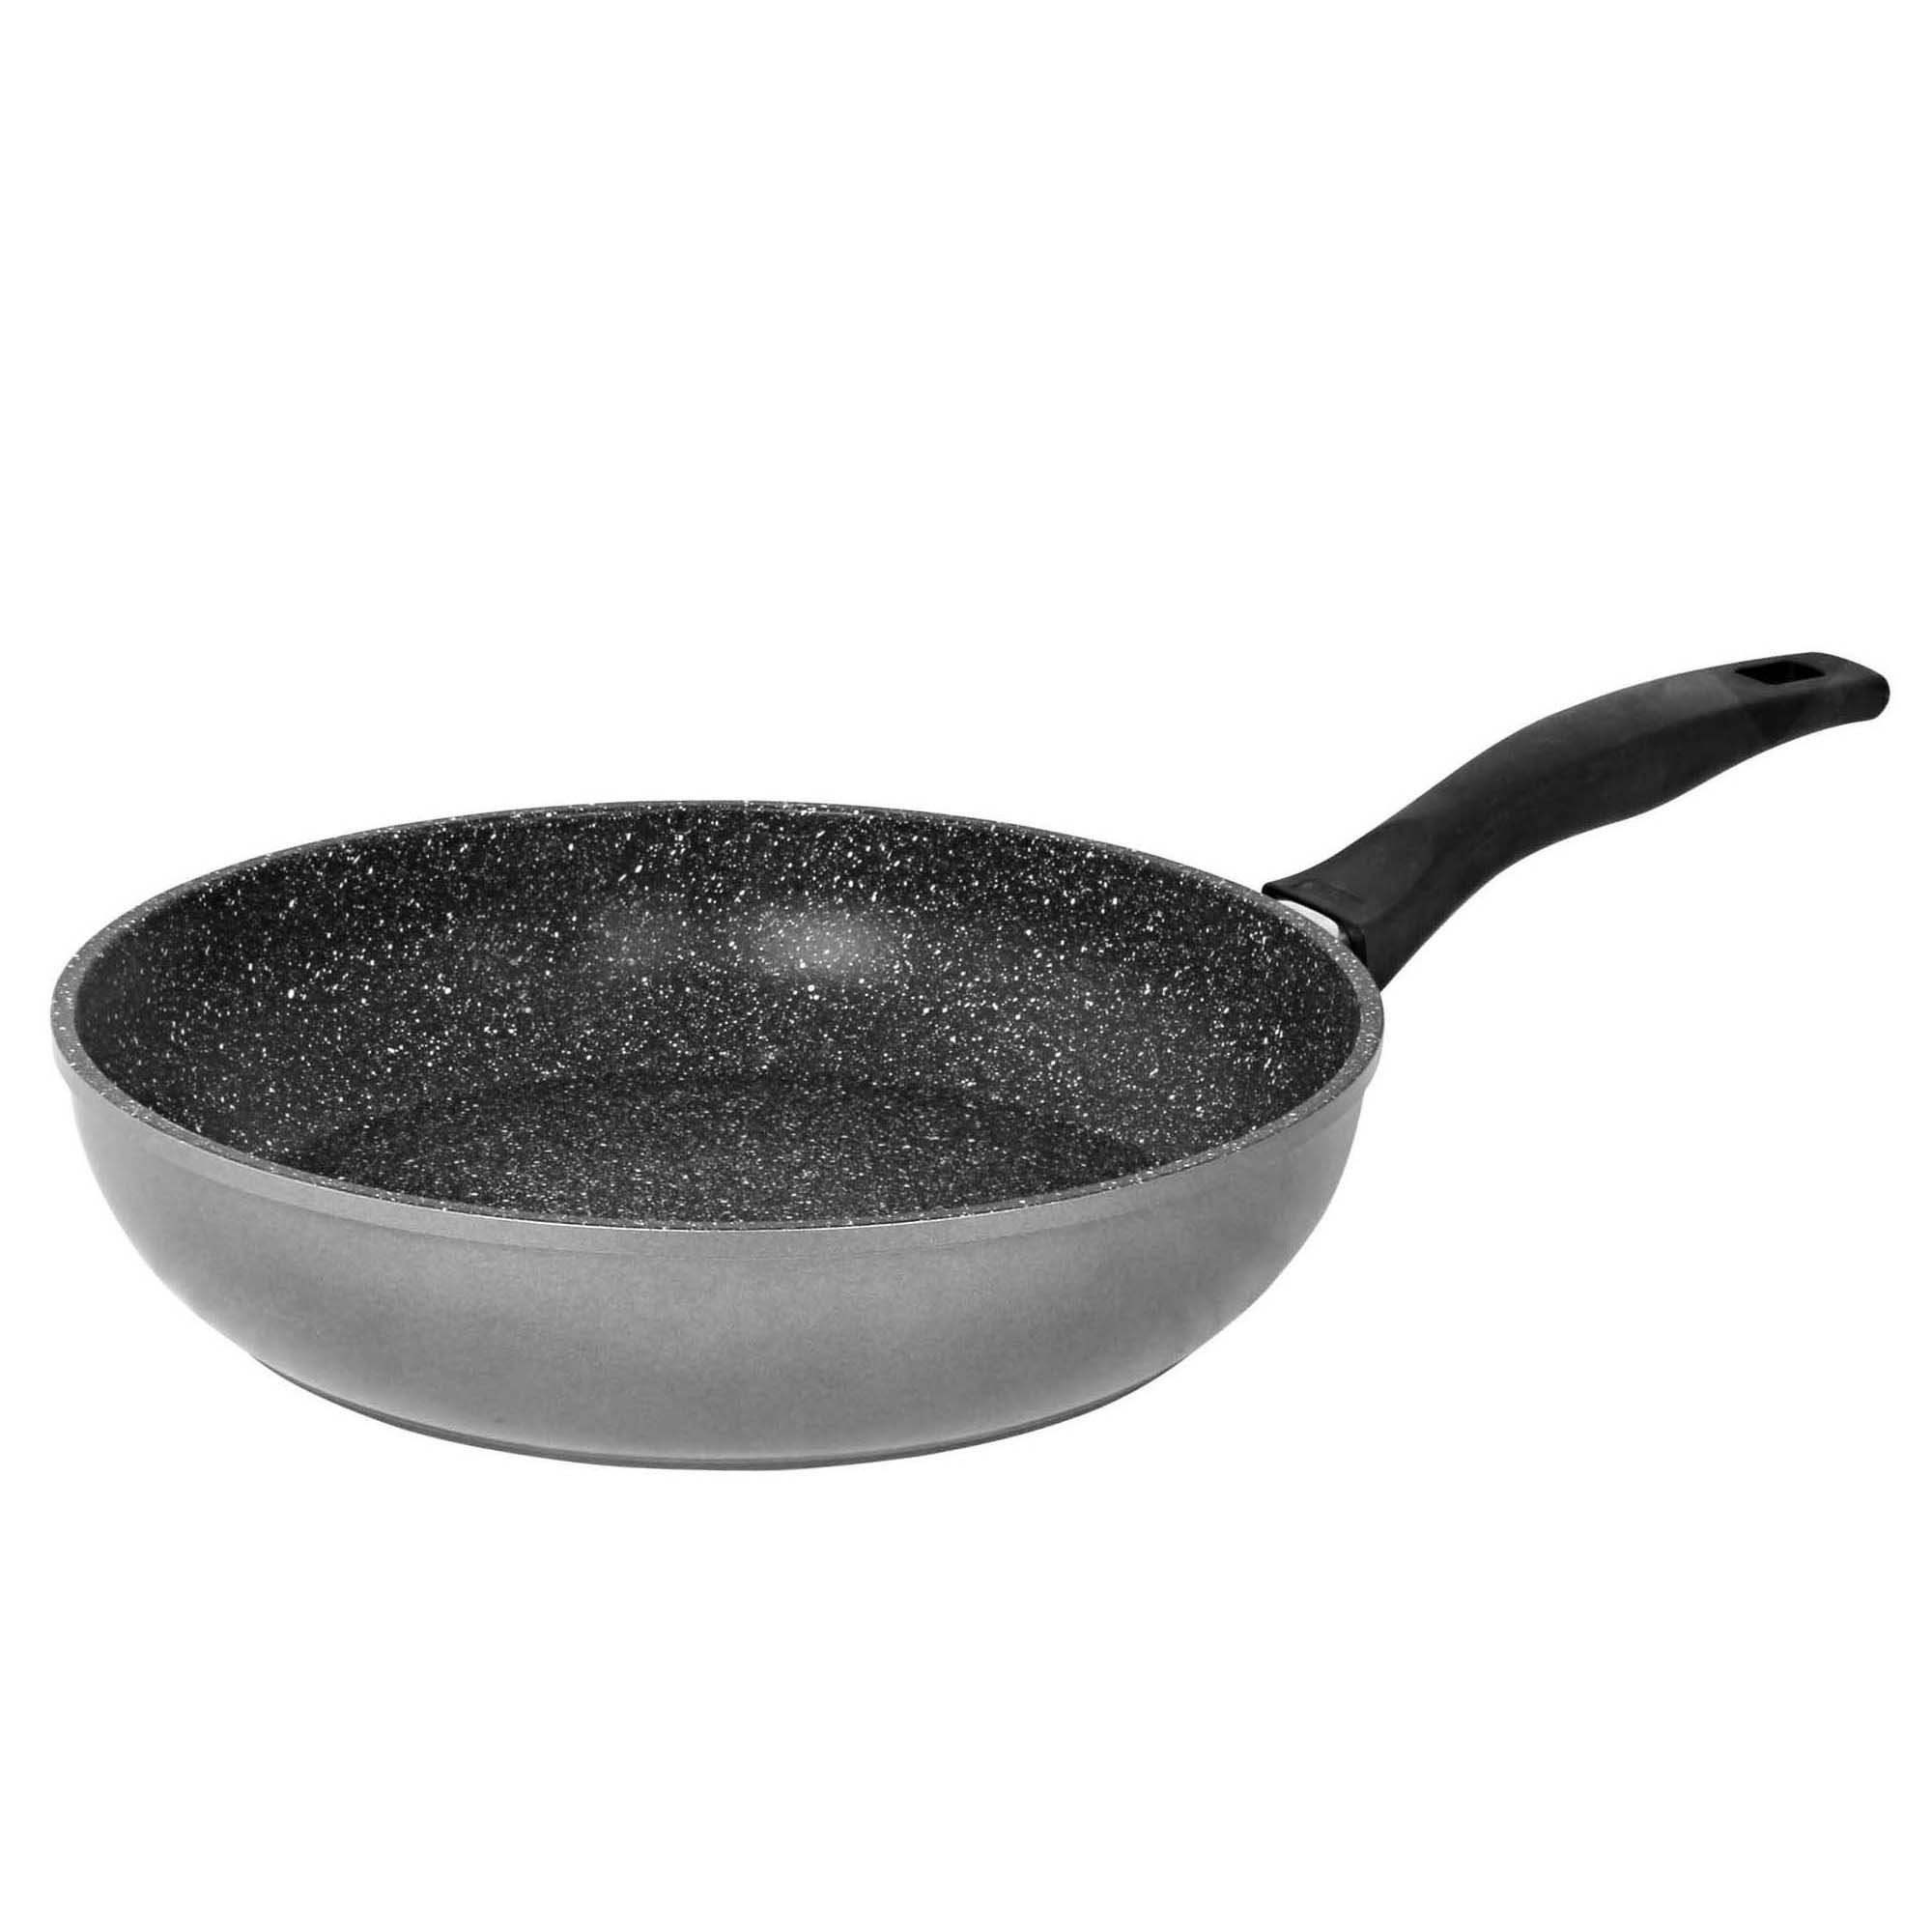 STONELINE® Deep Frying Pan 28 cm, Large Non-Stick Pan | CLASSIC